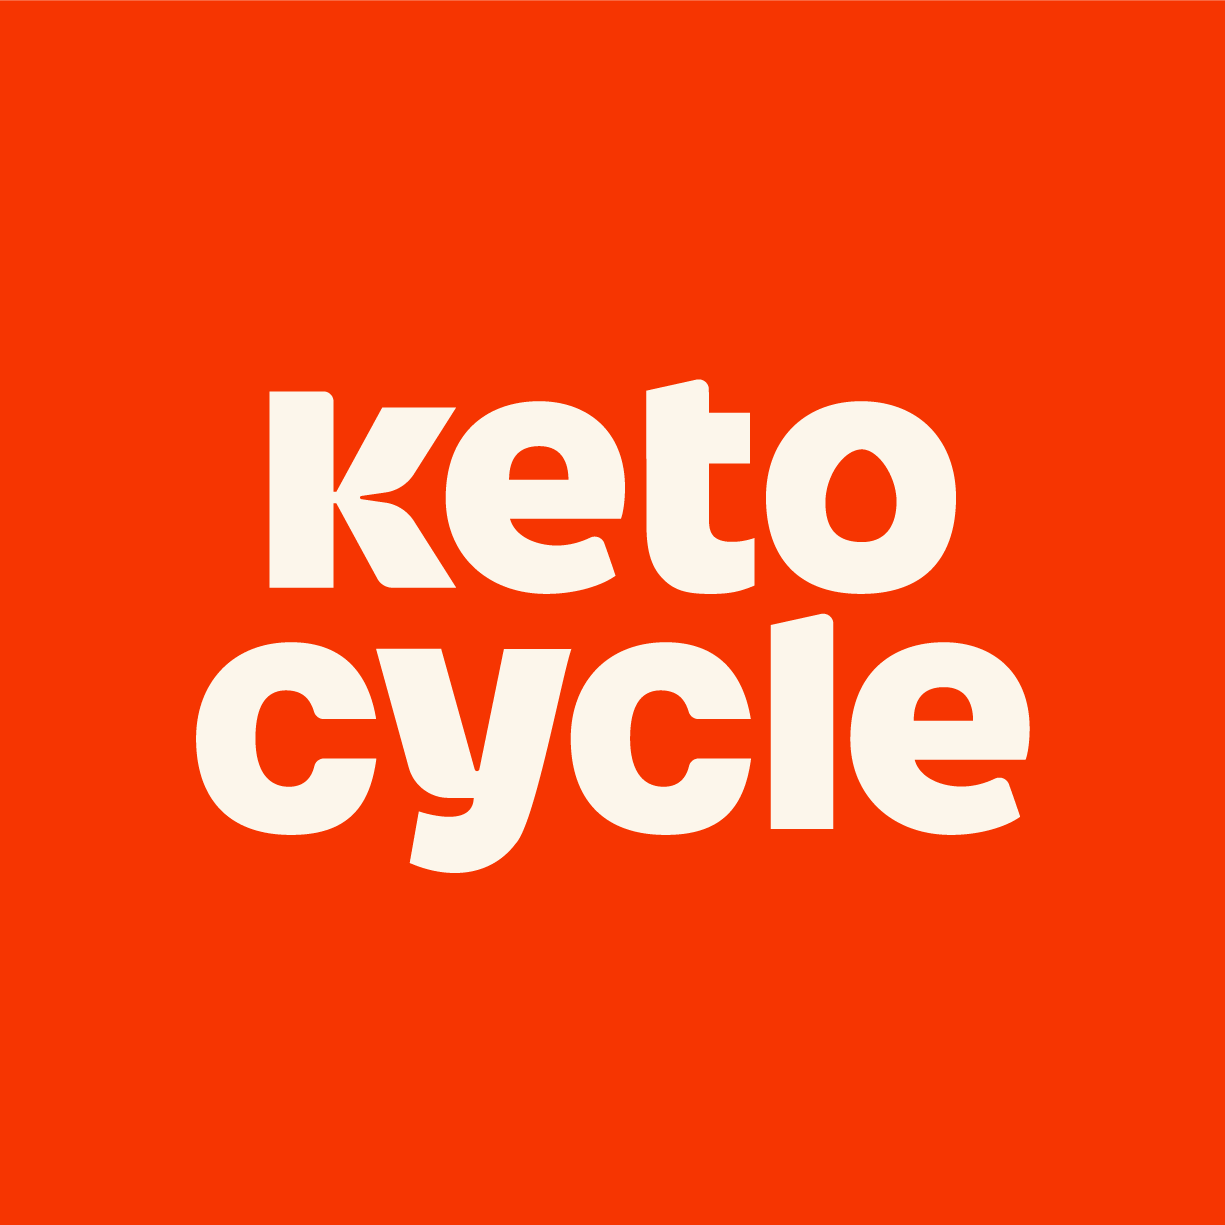 keto cycle logo